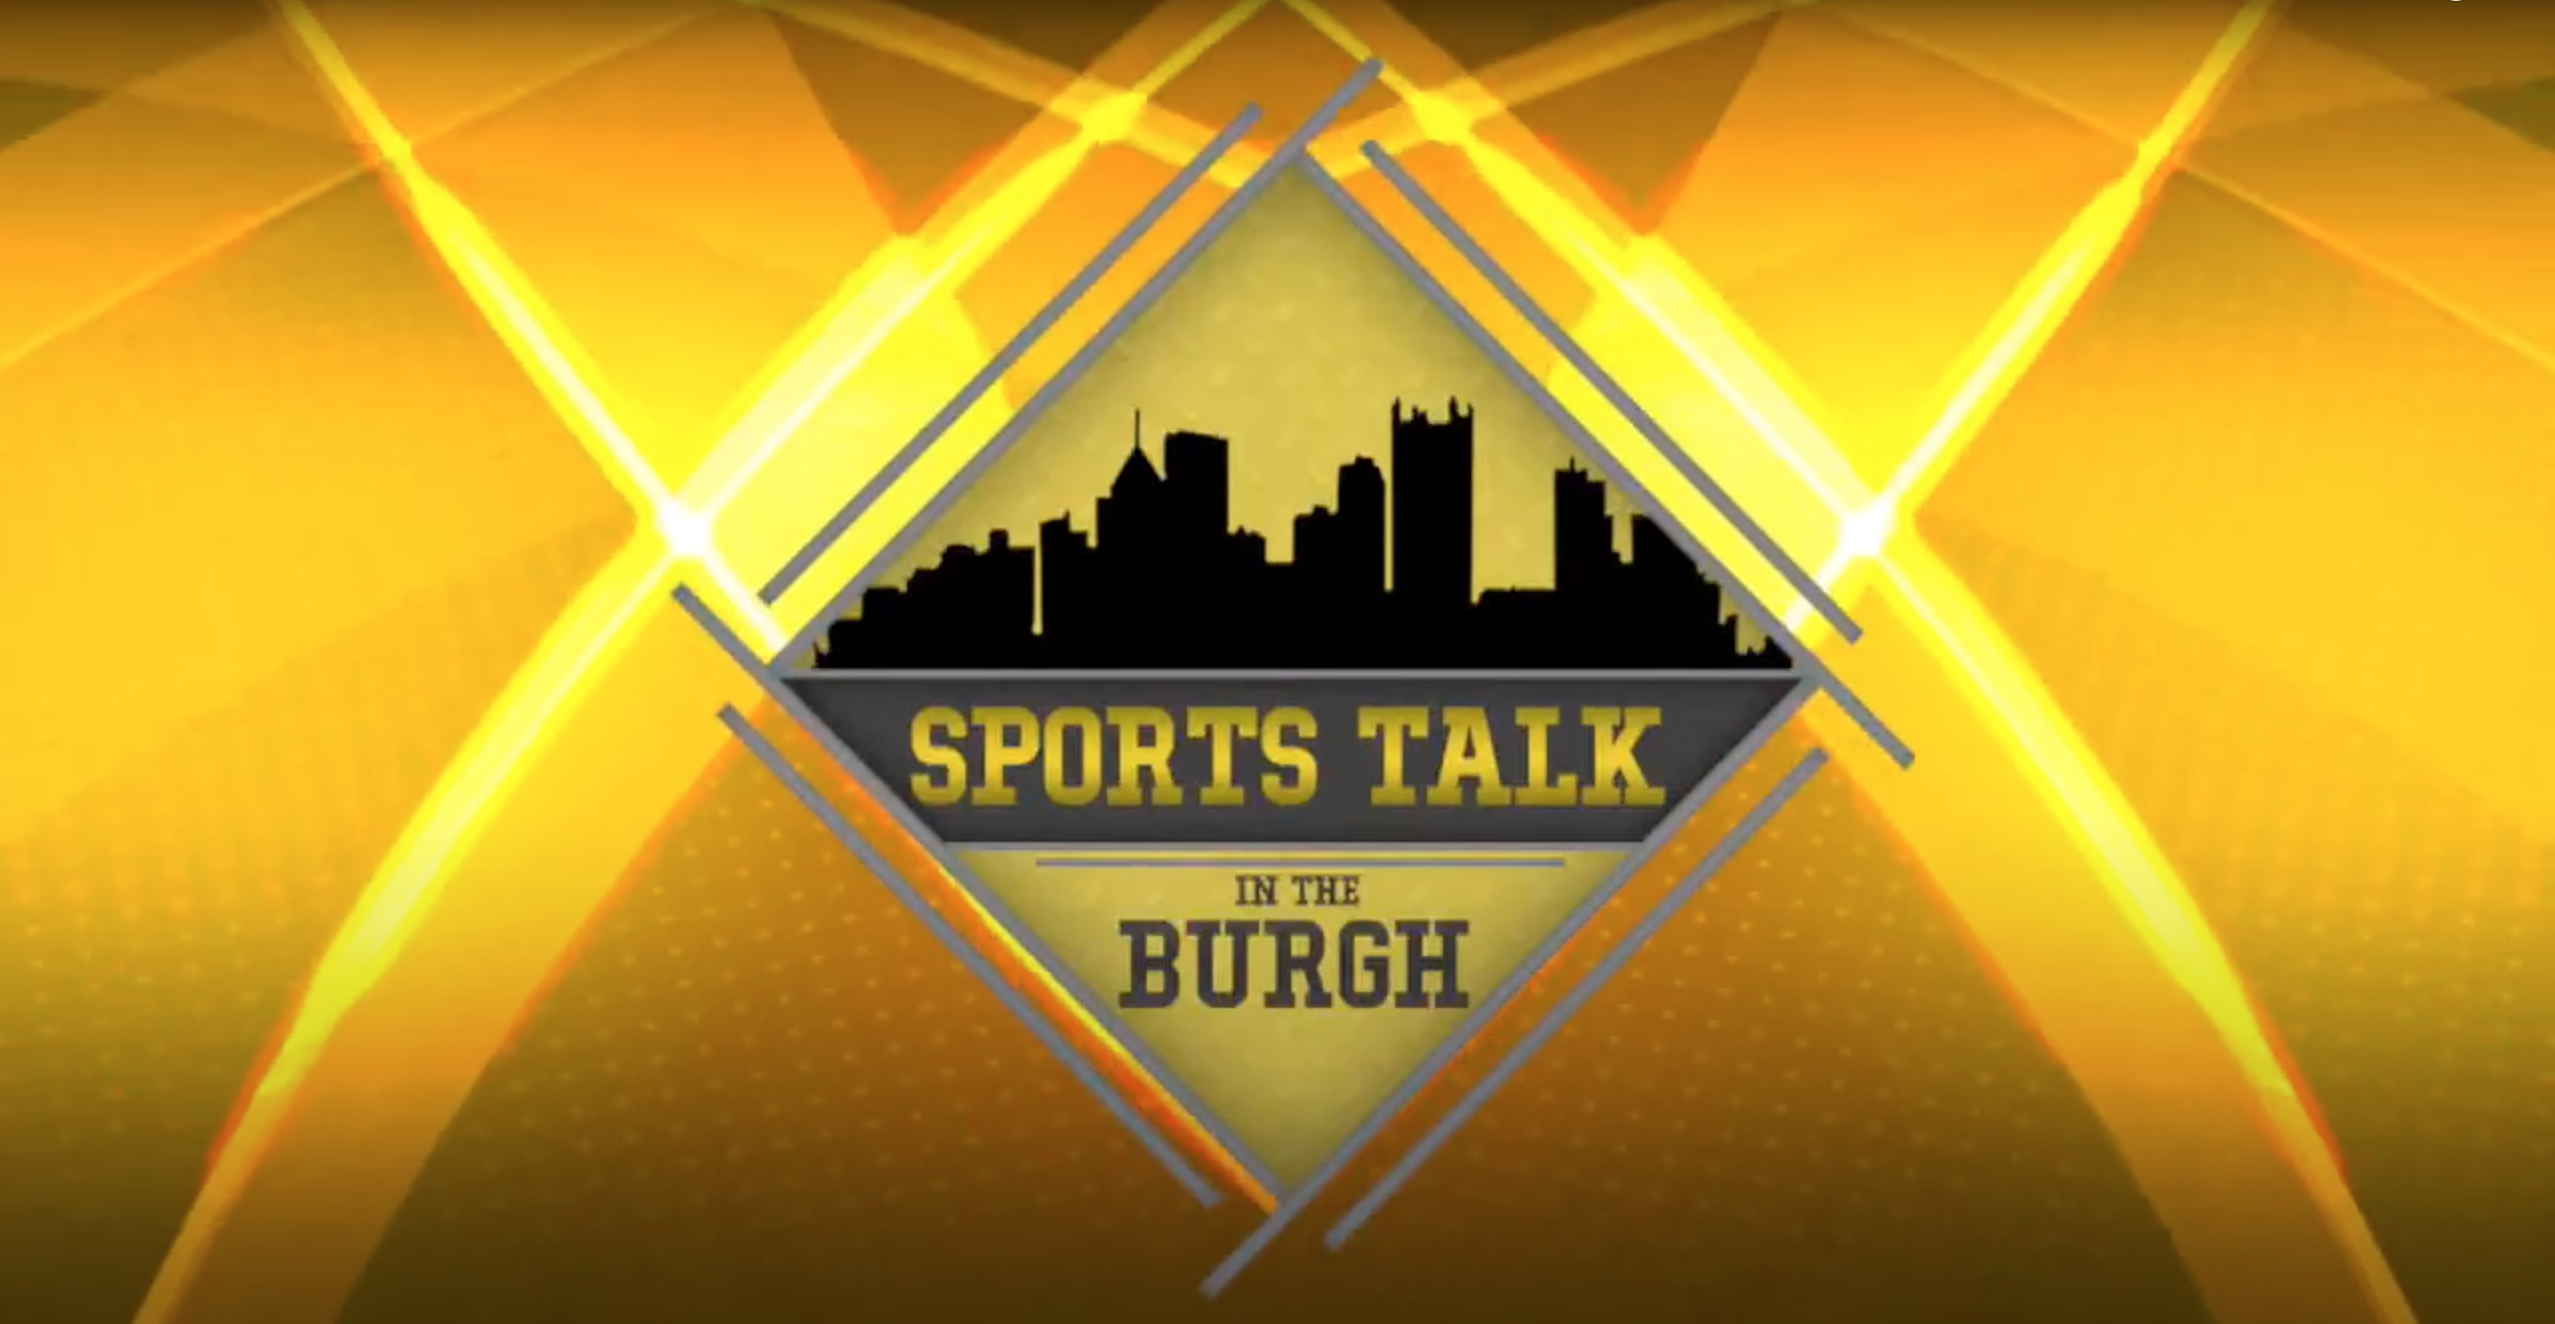 Sports Talk in the Burgh